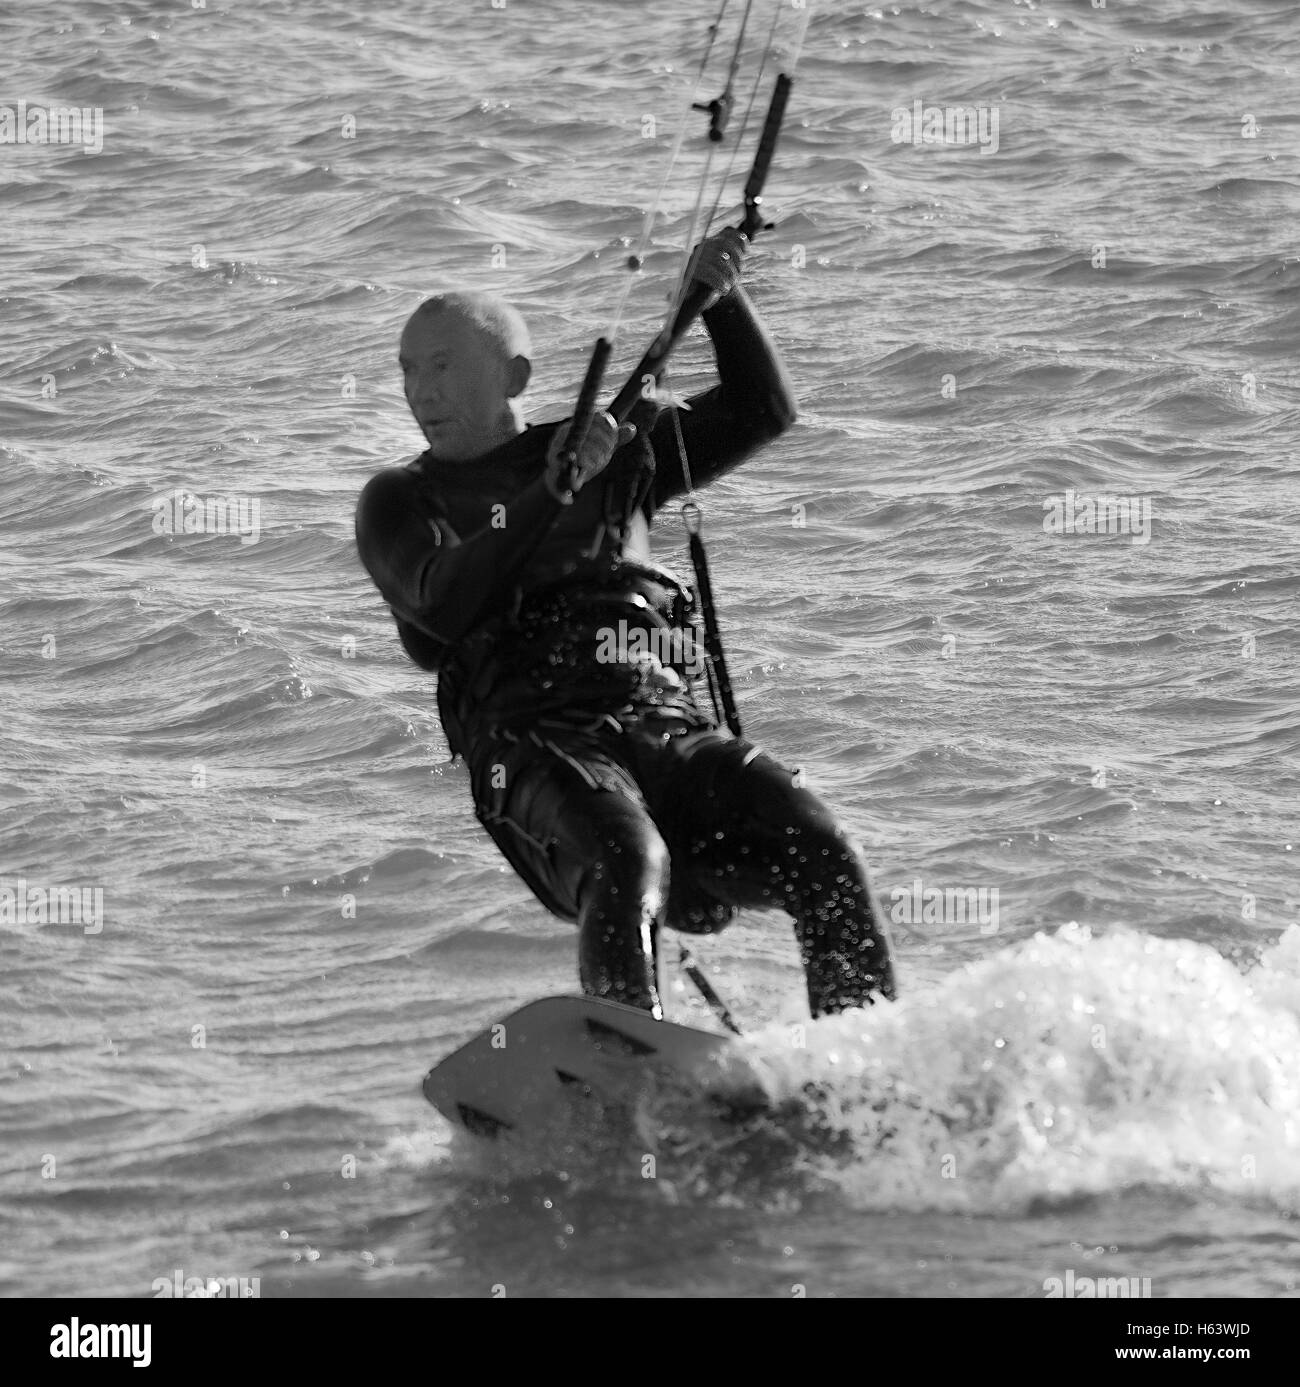 Kite, Surf, Swansea, Bay, sea, water, harness, wetsuit, wave, Stock Photo